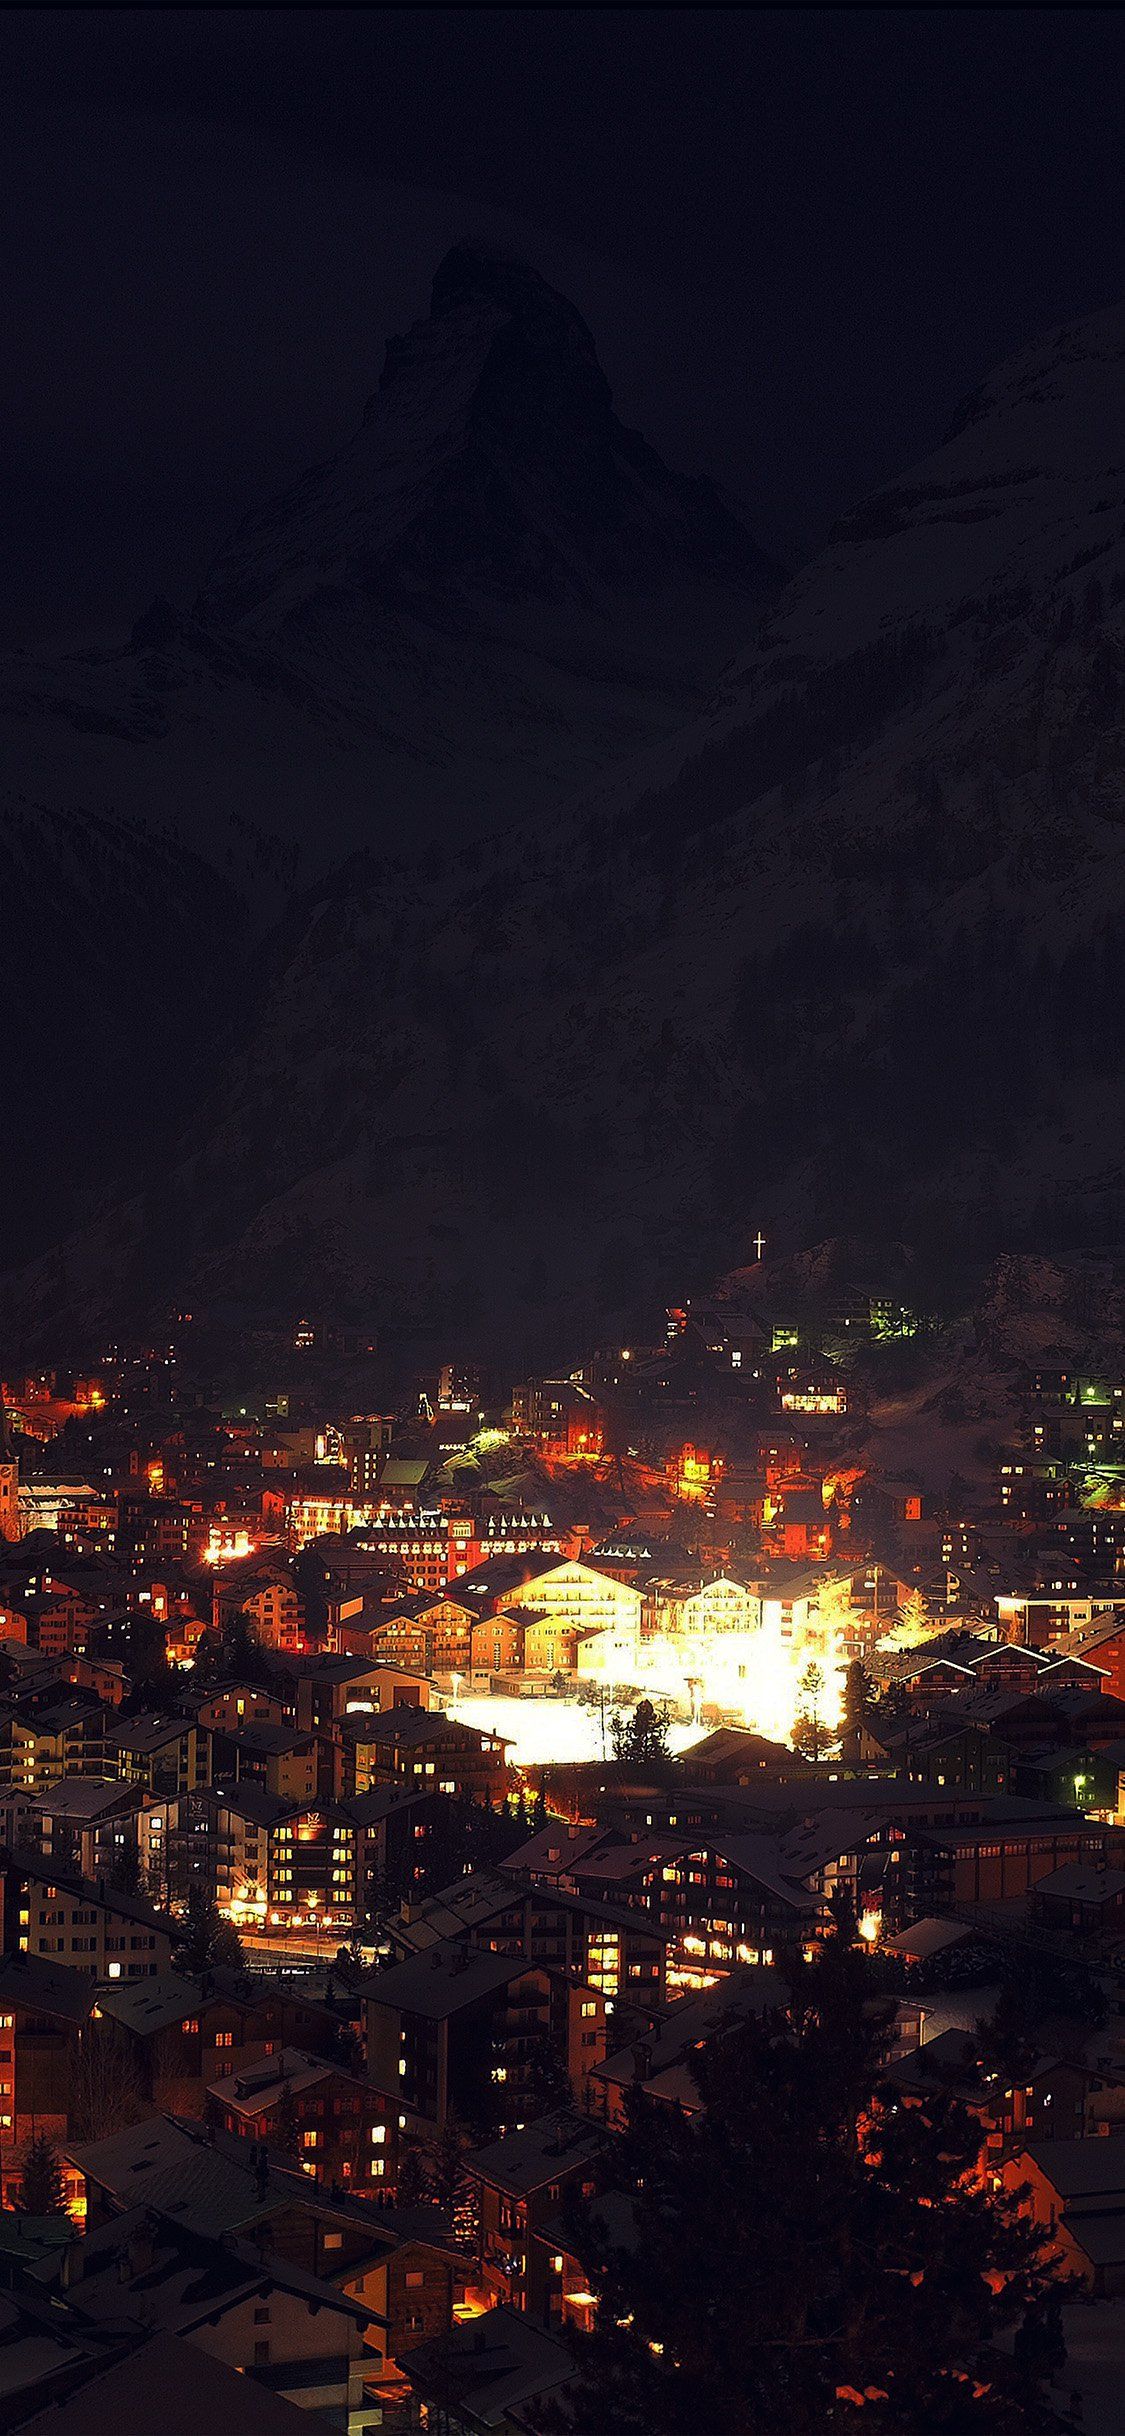 Night city light winter iPhone X Wallpaper Free Download